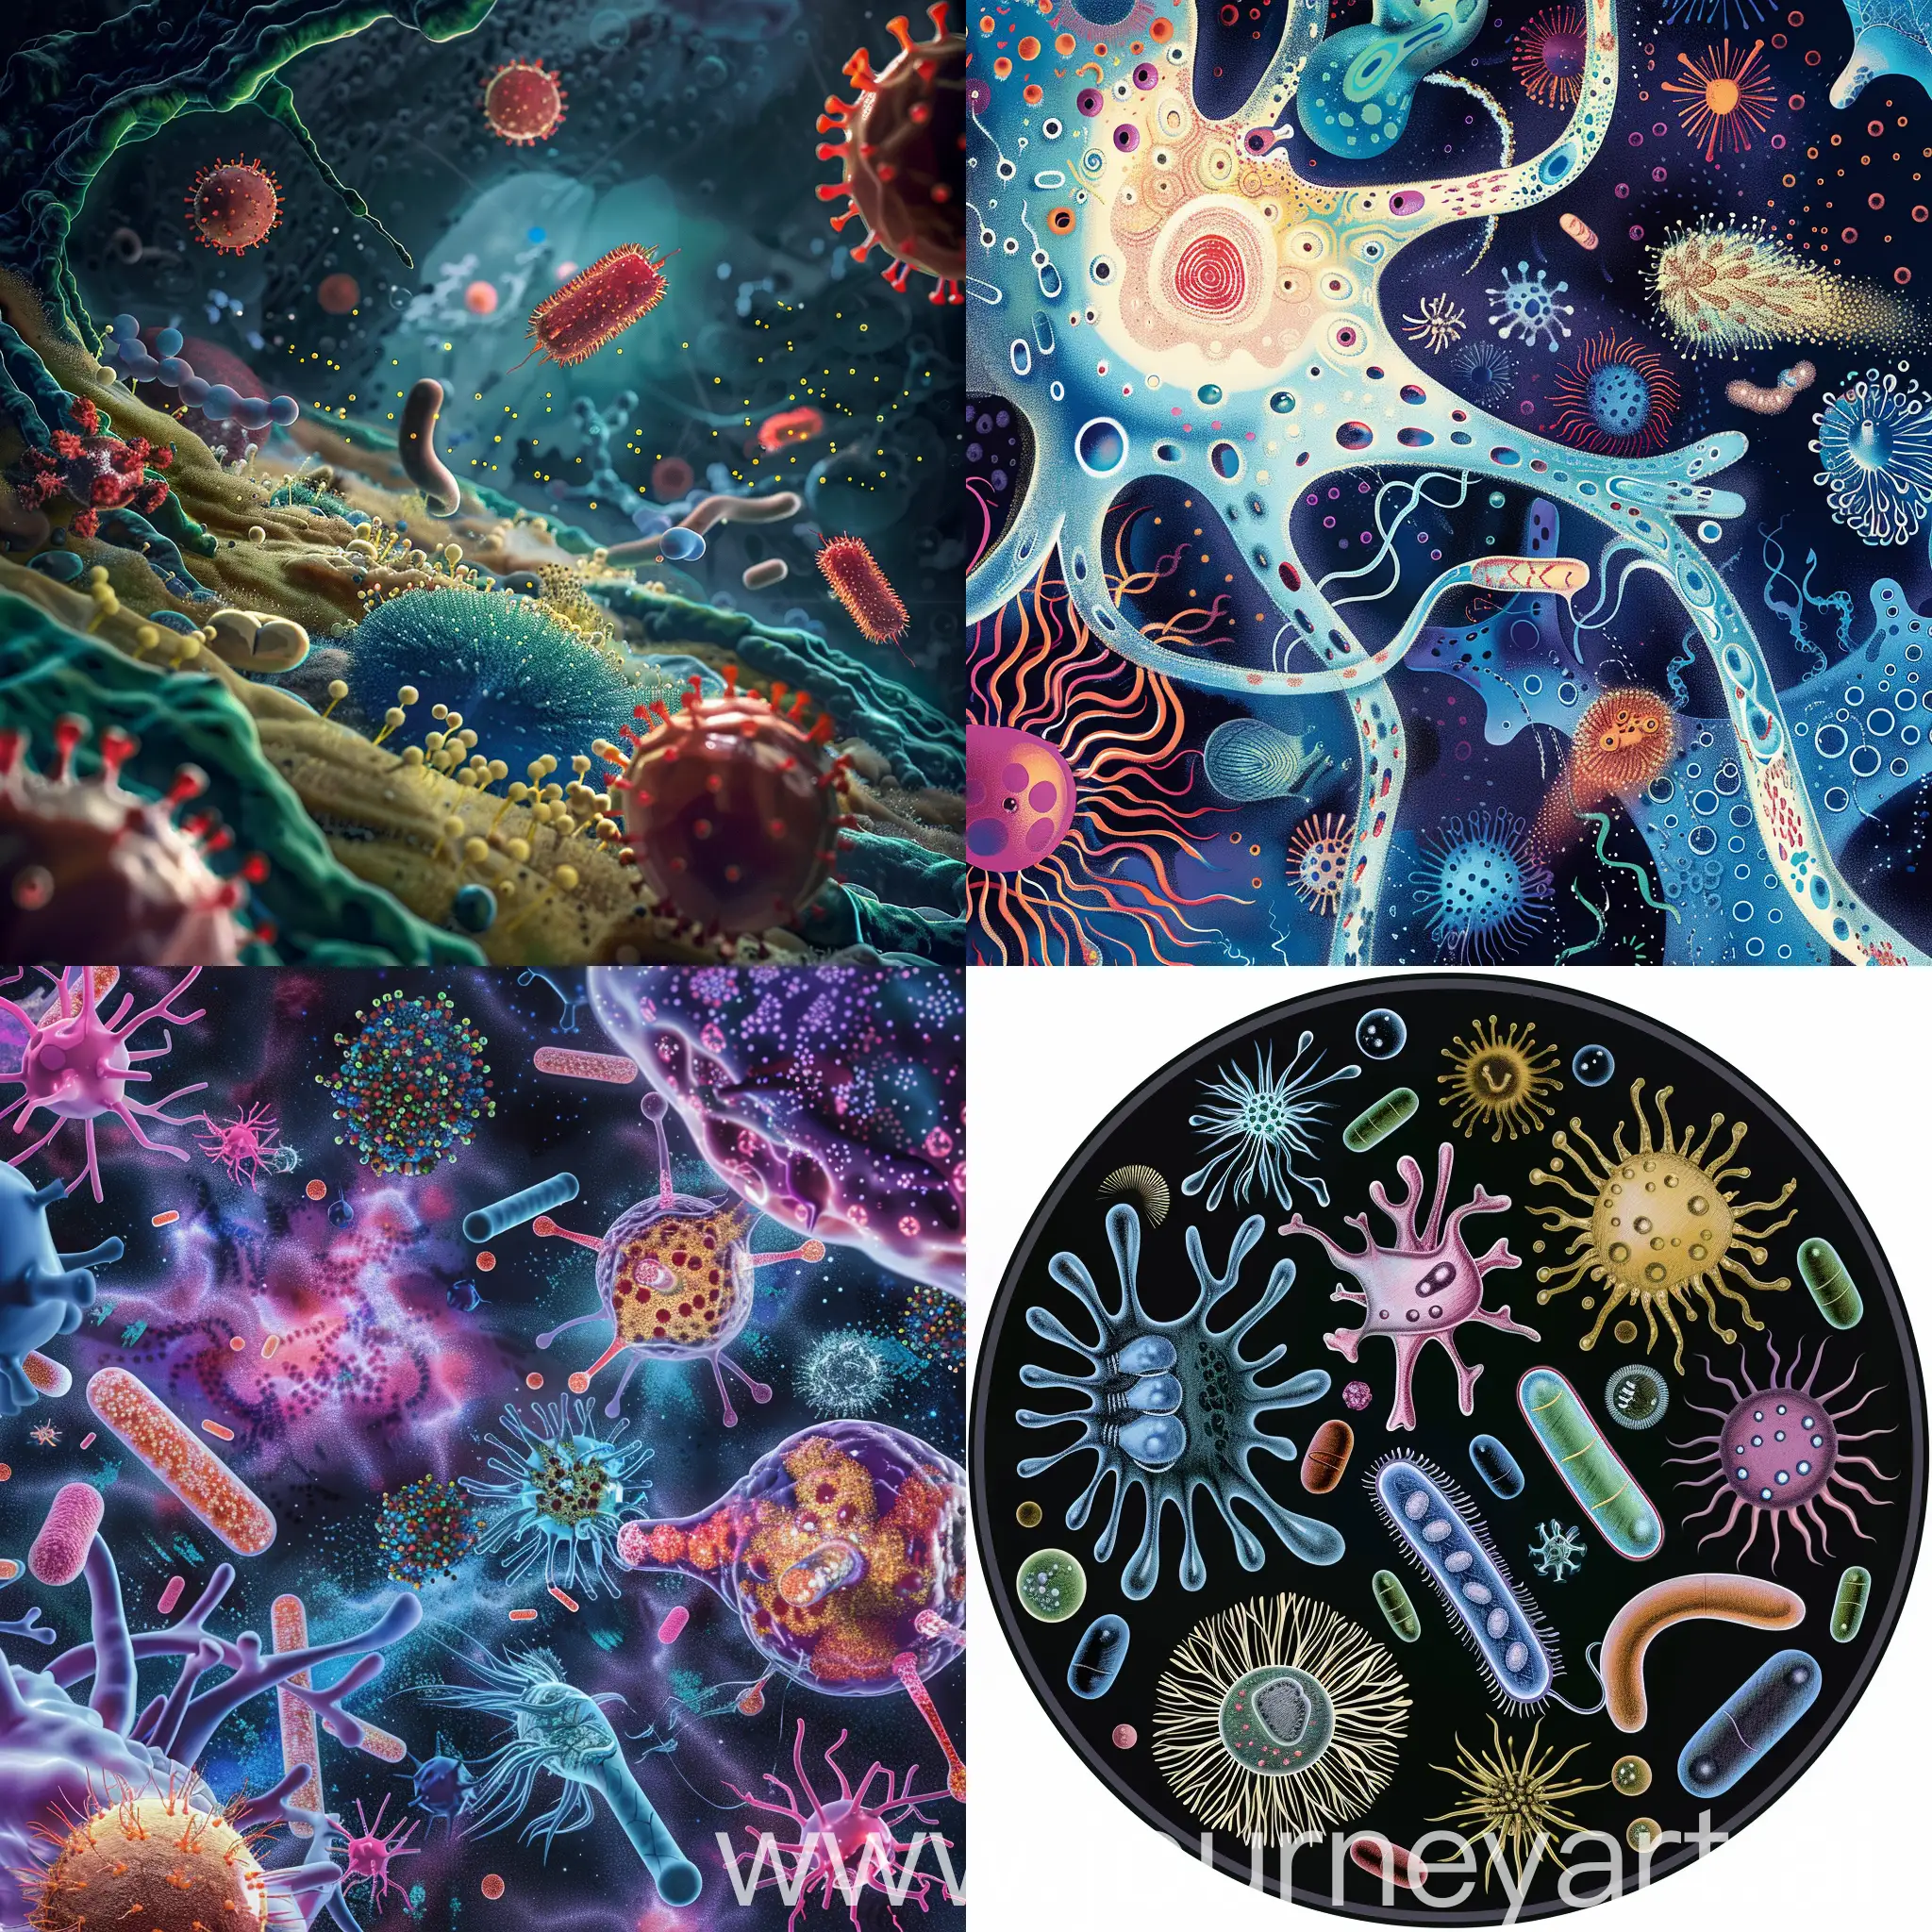 Microscopic-World-Exploration-Intricate-Microorganism-Processes